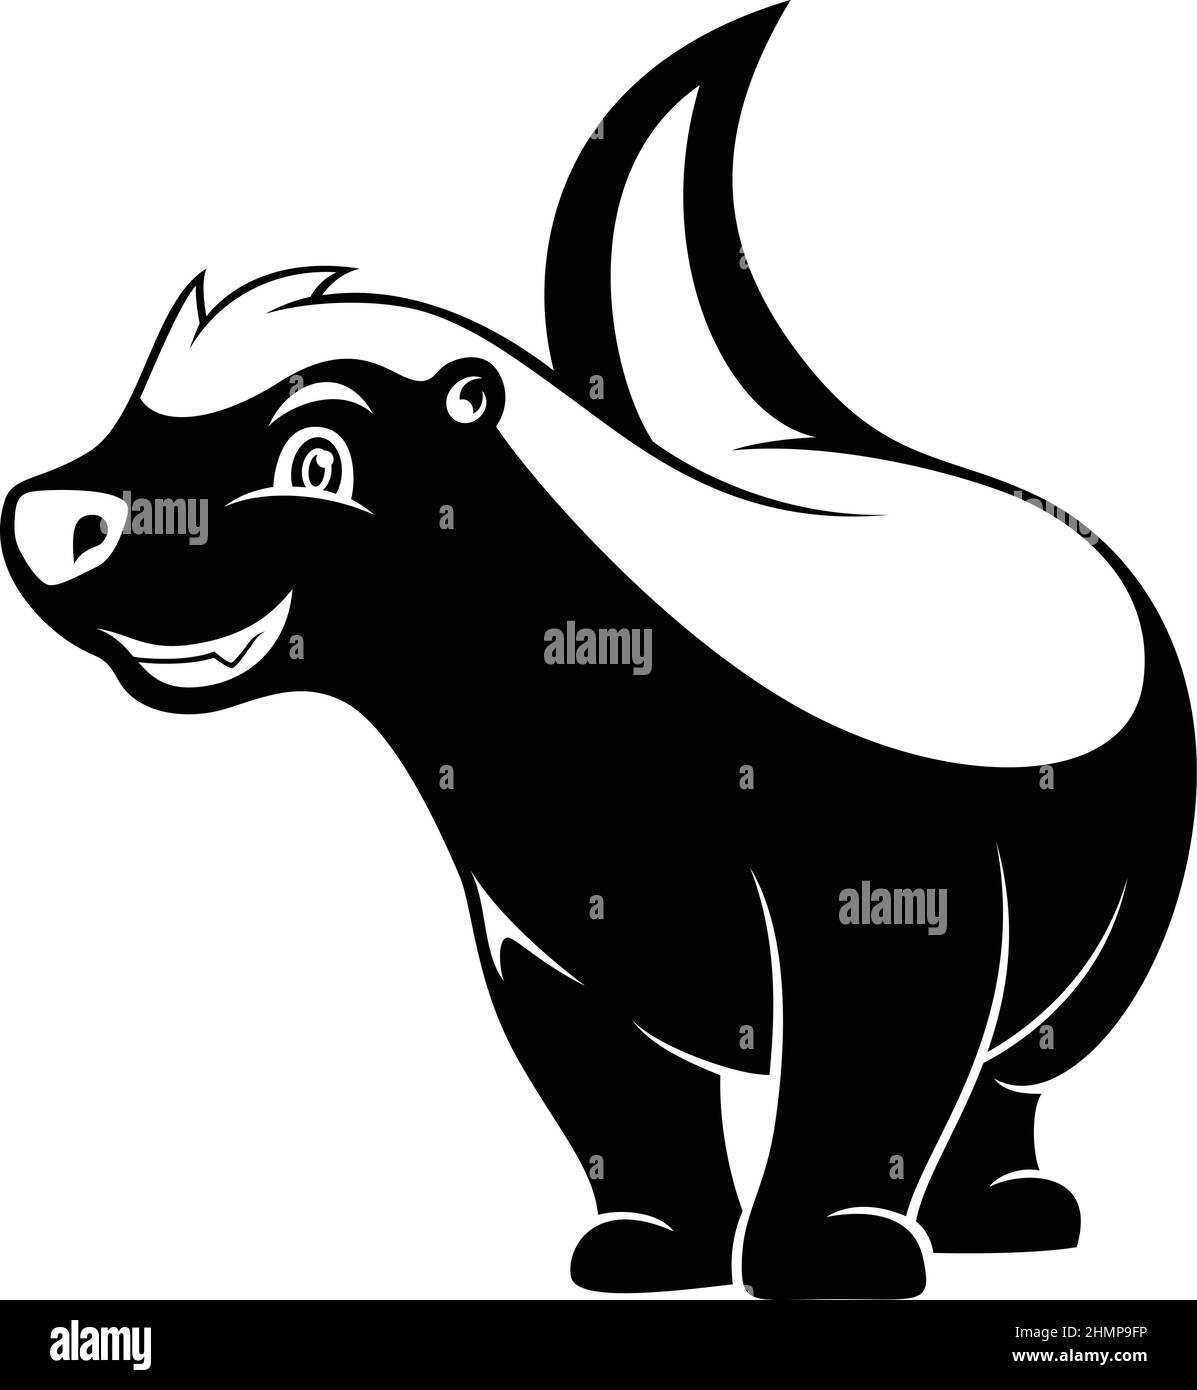 Funny Honey Badger Cartoon Character Design Stock Vector Image & Art - Alamy